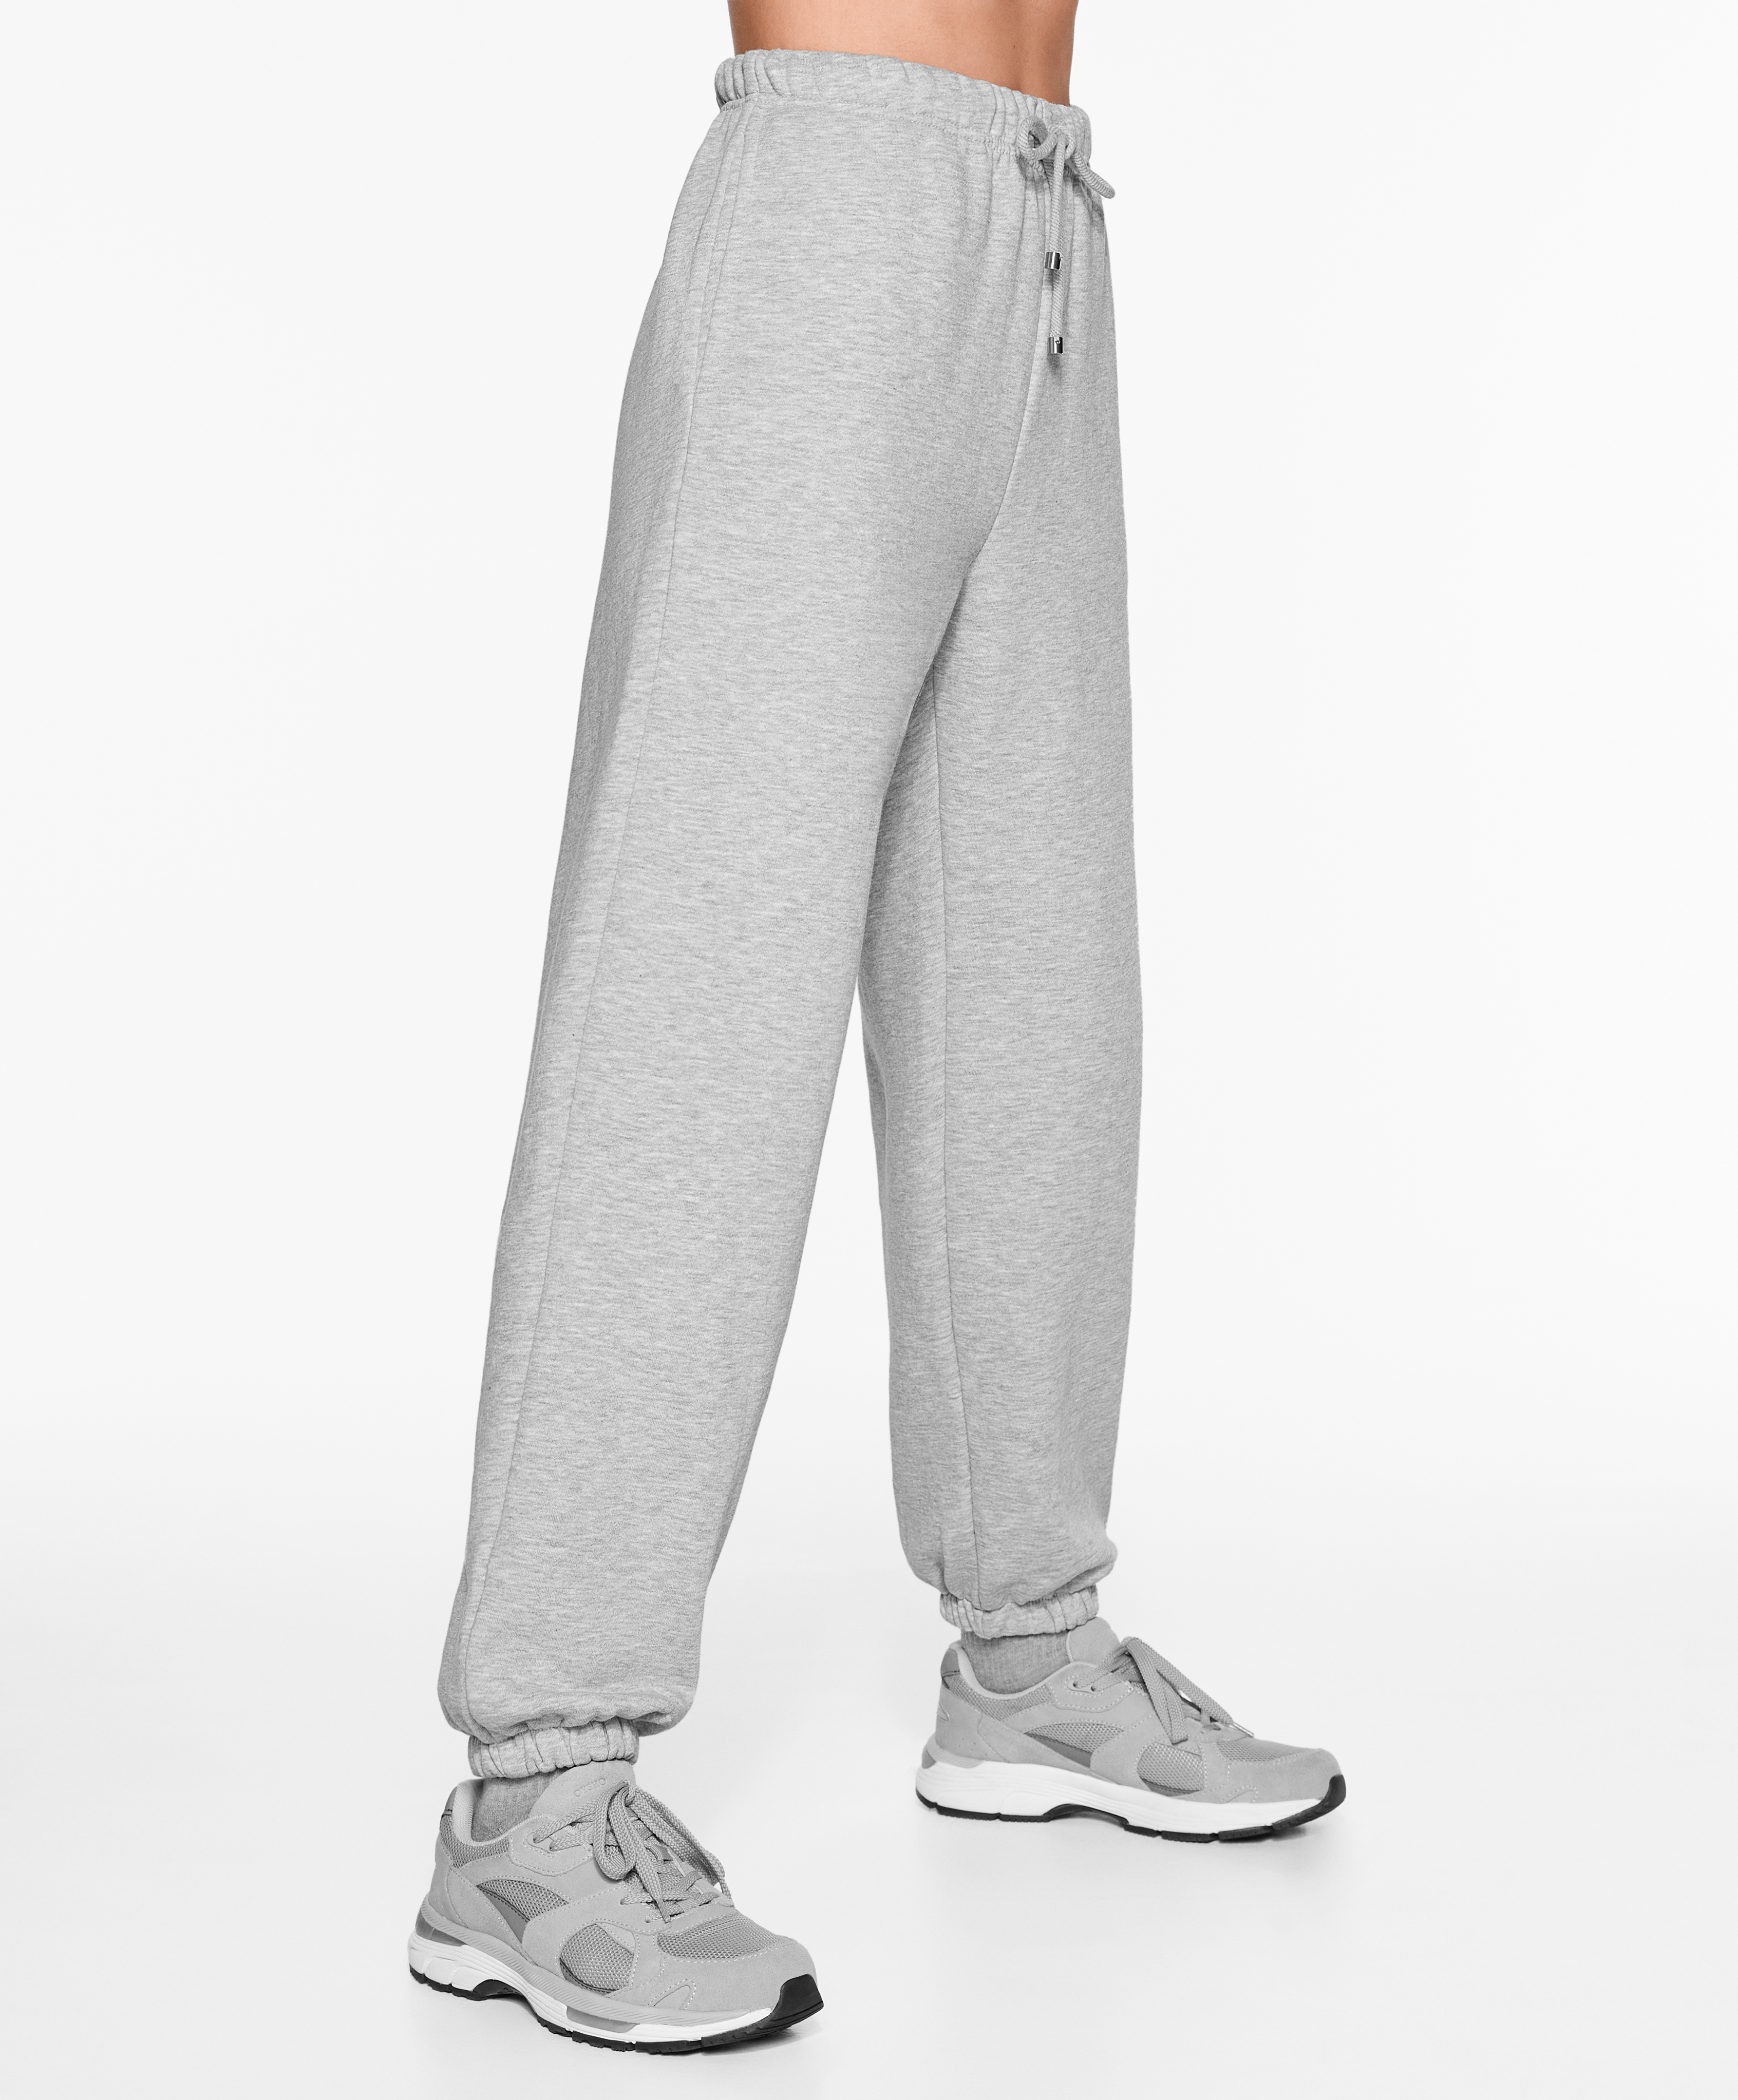 Willow Dance, Pants & Jumpsuits, Willow Dance Cinch Bottom Sweatpants  High Waist Pockets Athletic Fit Joggers Xl